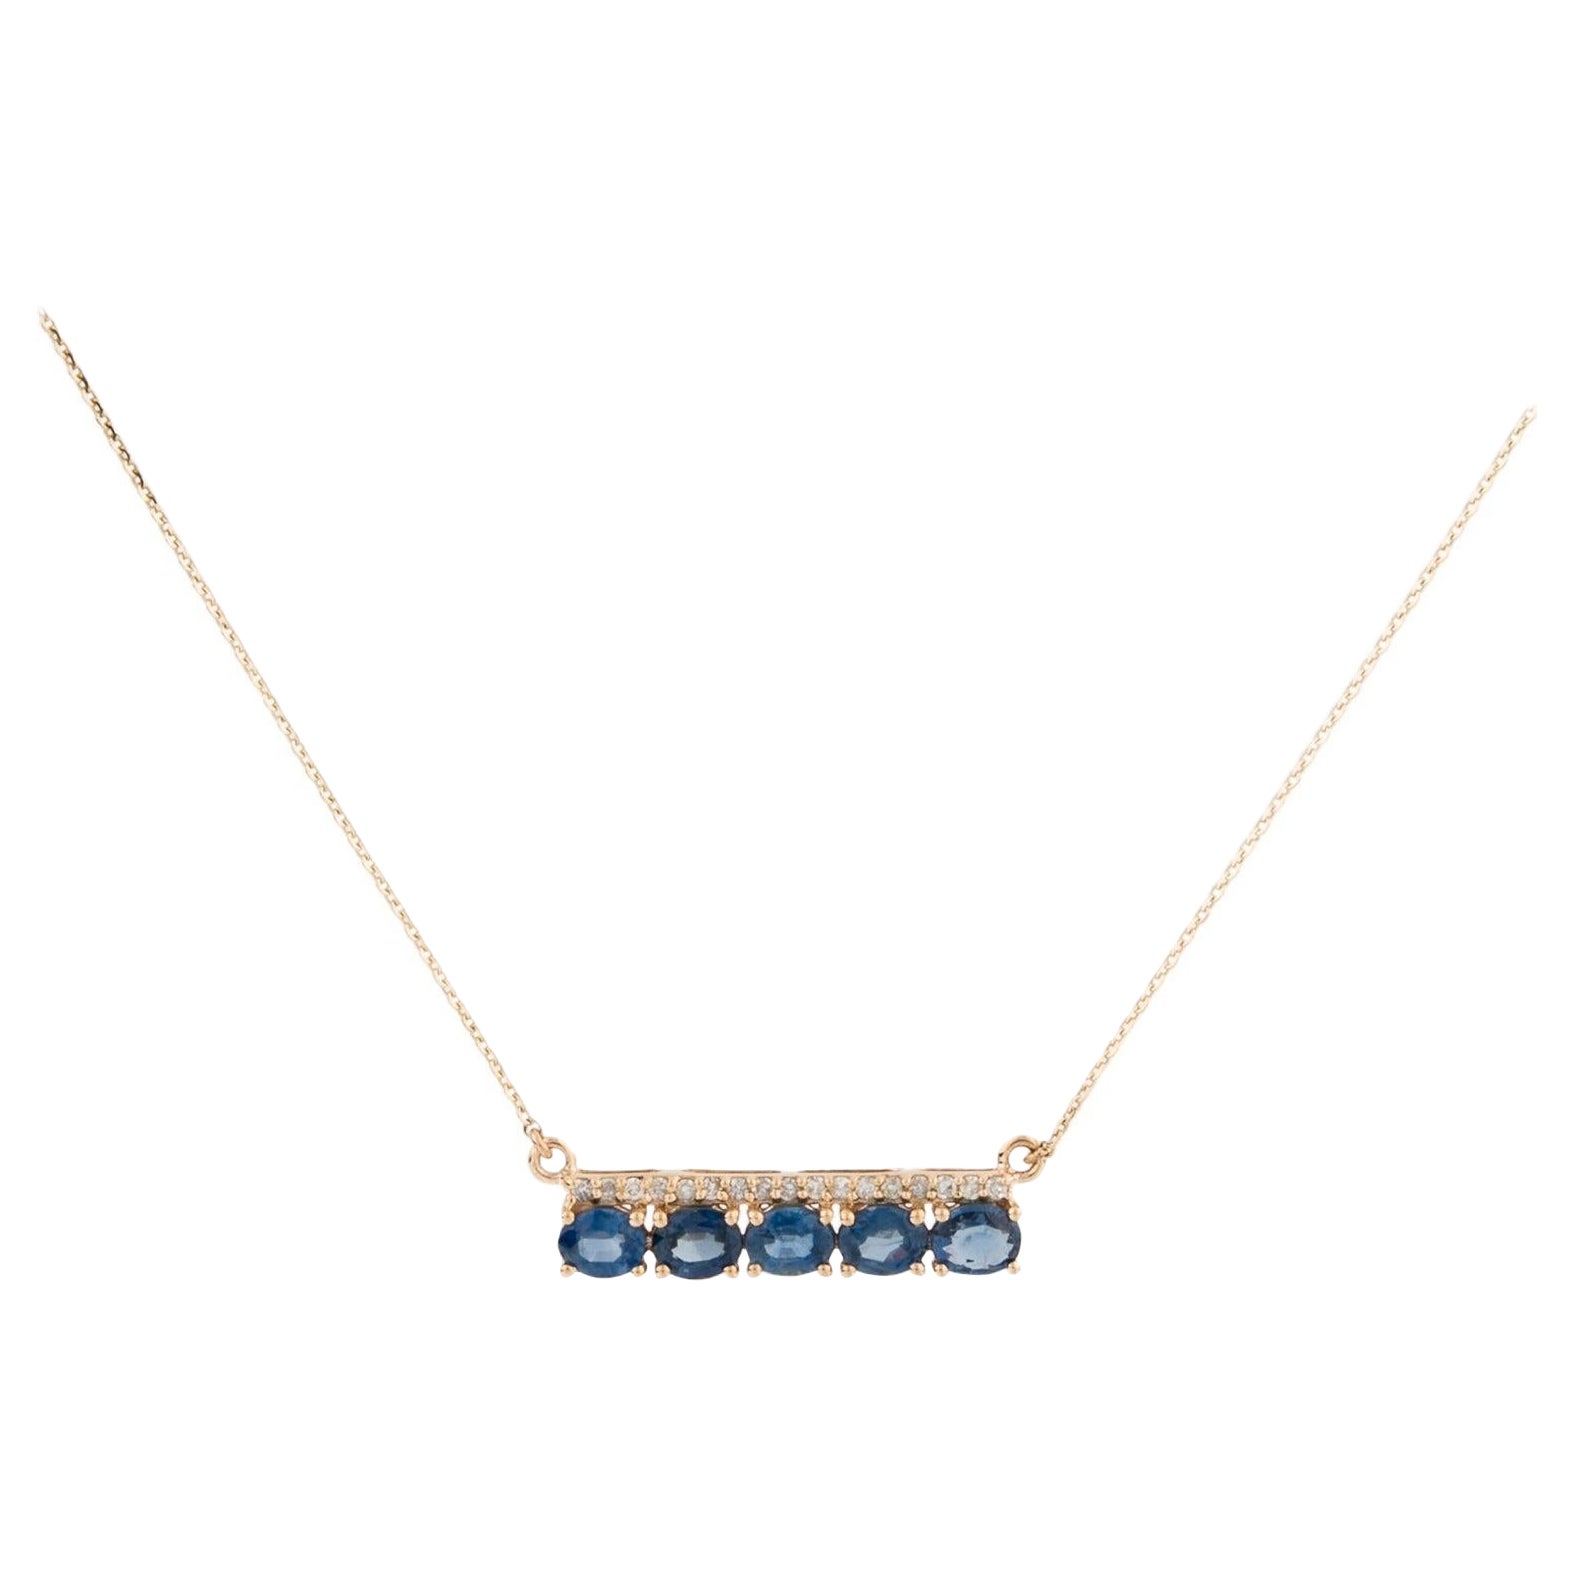 Exquisite 14K Sapphire & Diamond Bar Pendant Necklace - Elegant Gemstone Sparkle